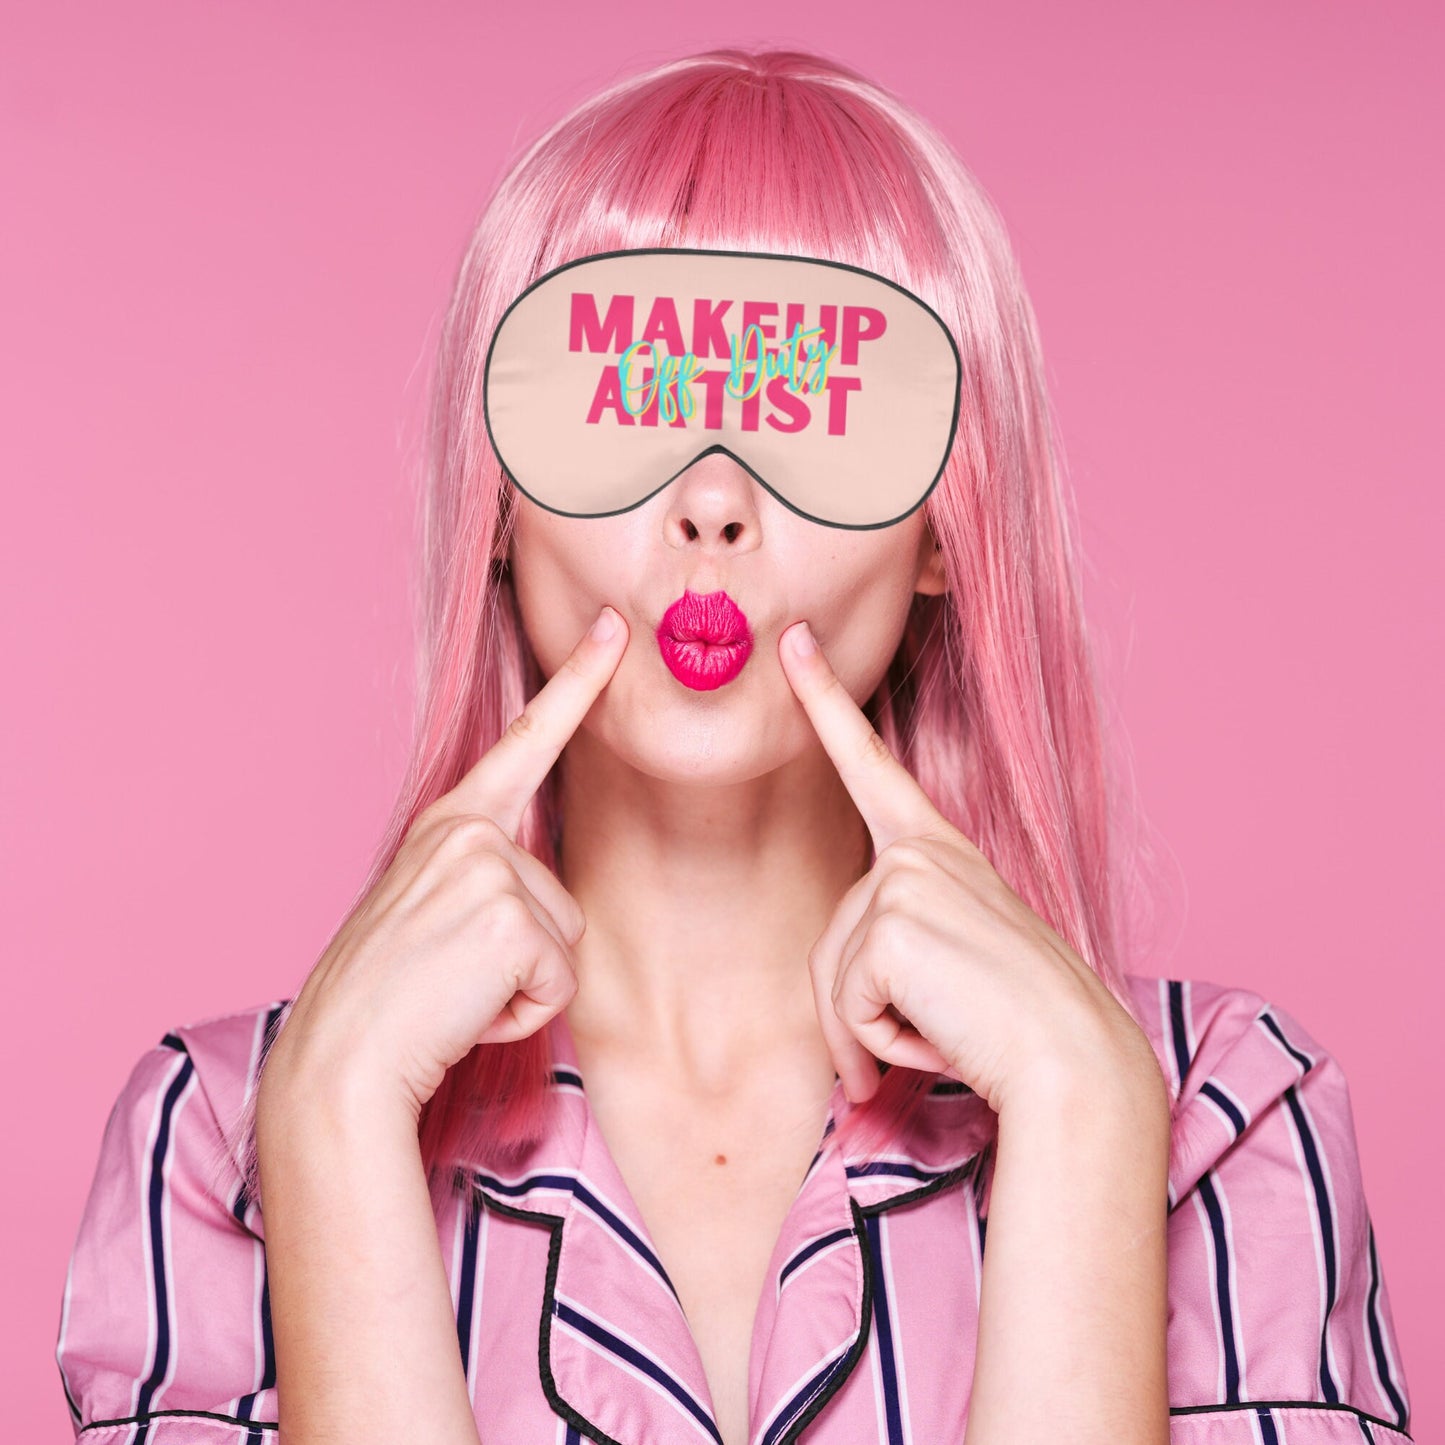 Makeup Artist Sleep Mask Satin Eye Mask Face Cover Travel Kit Cosmetics Accessories MUA Gifts Retro y2k 90s Pink Black White Sleeping Mask